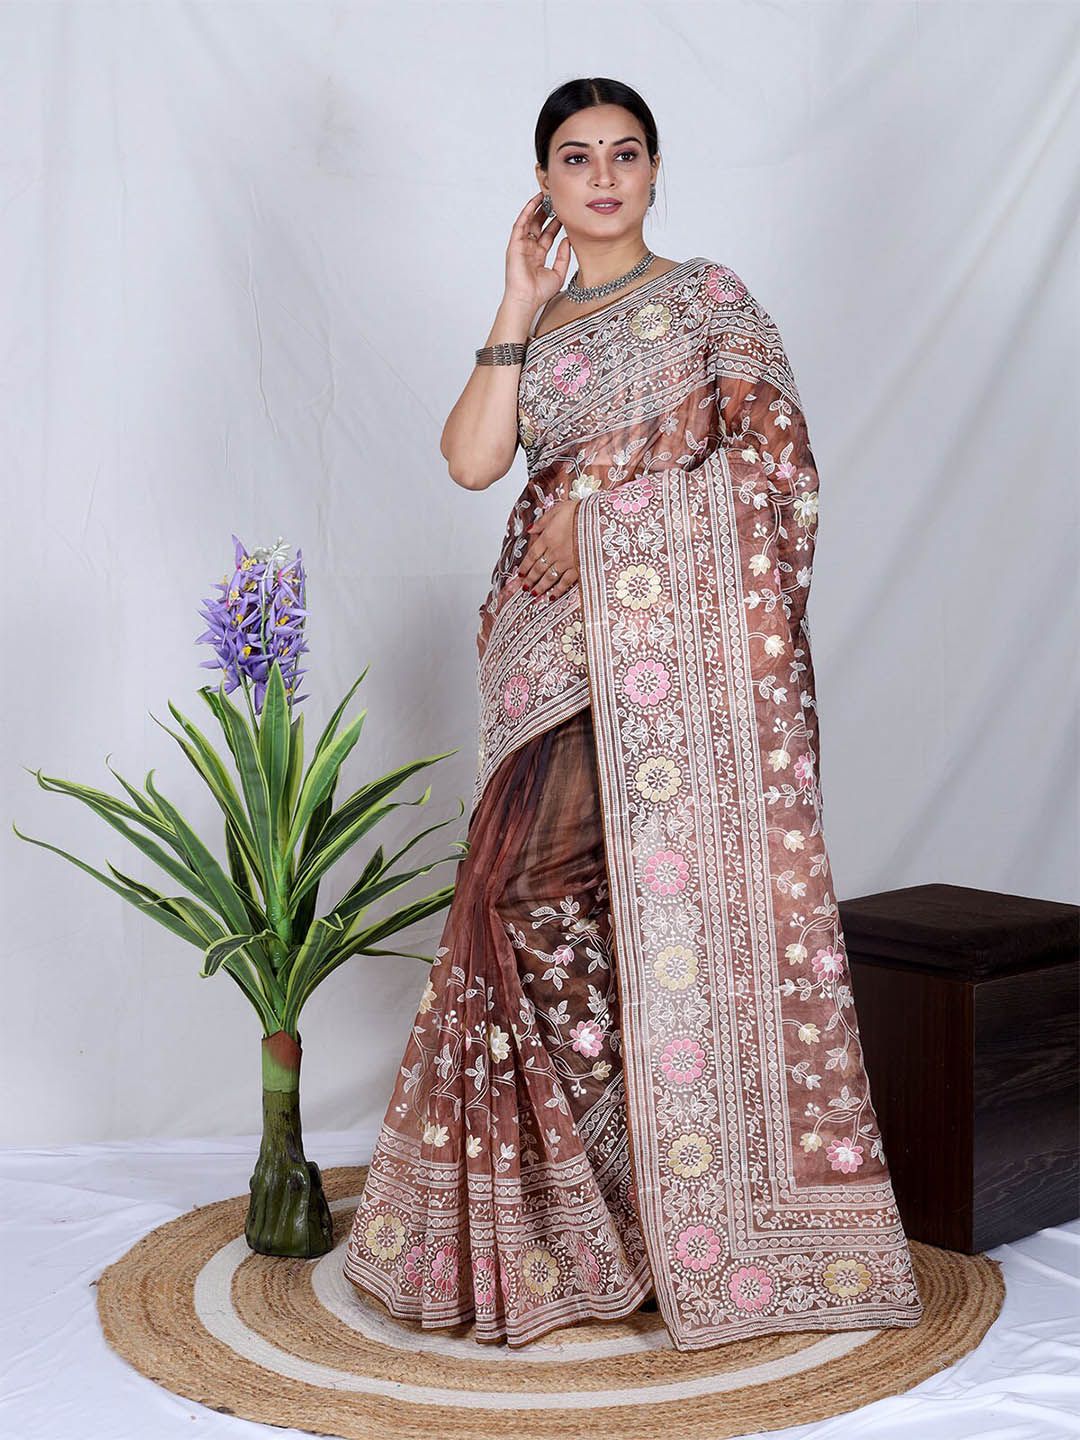 ODETTE Brown & White Floral Embroidered Organza Saree Price in India